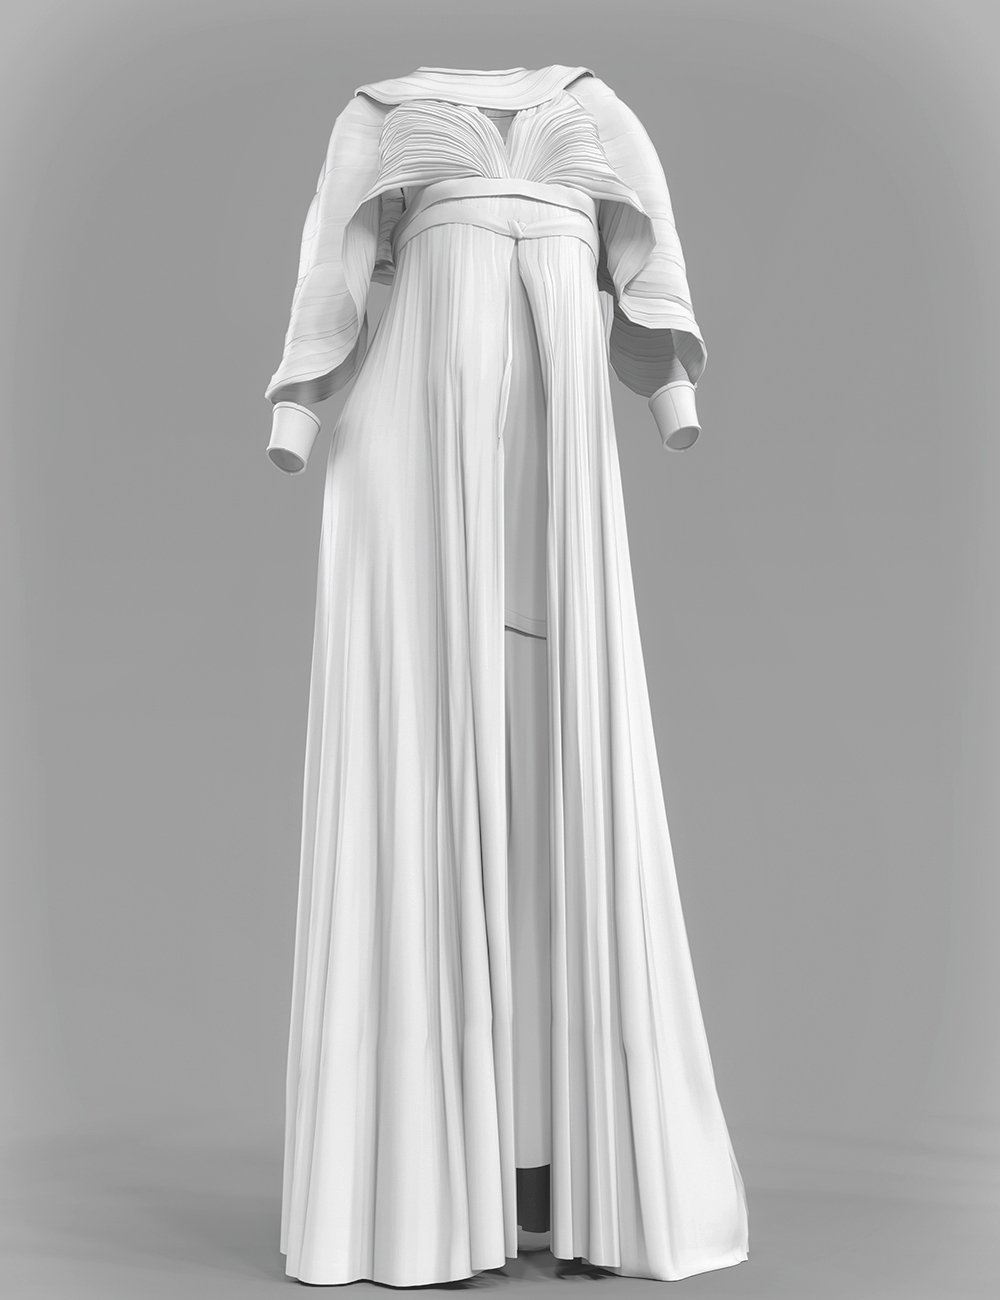 dForce Hemet-nisut Outfit for Genesis 8 Females by: Arki, 3D Models by Daz 3D